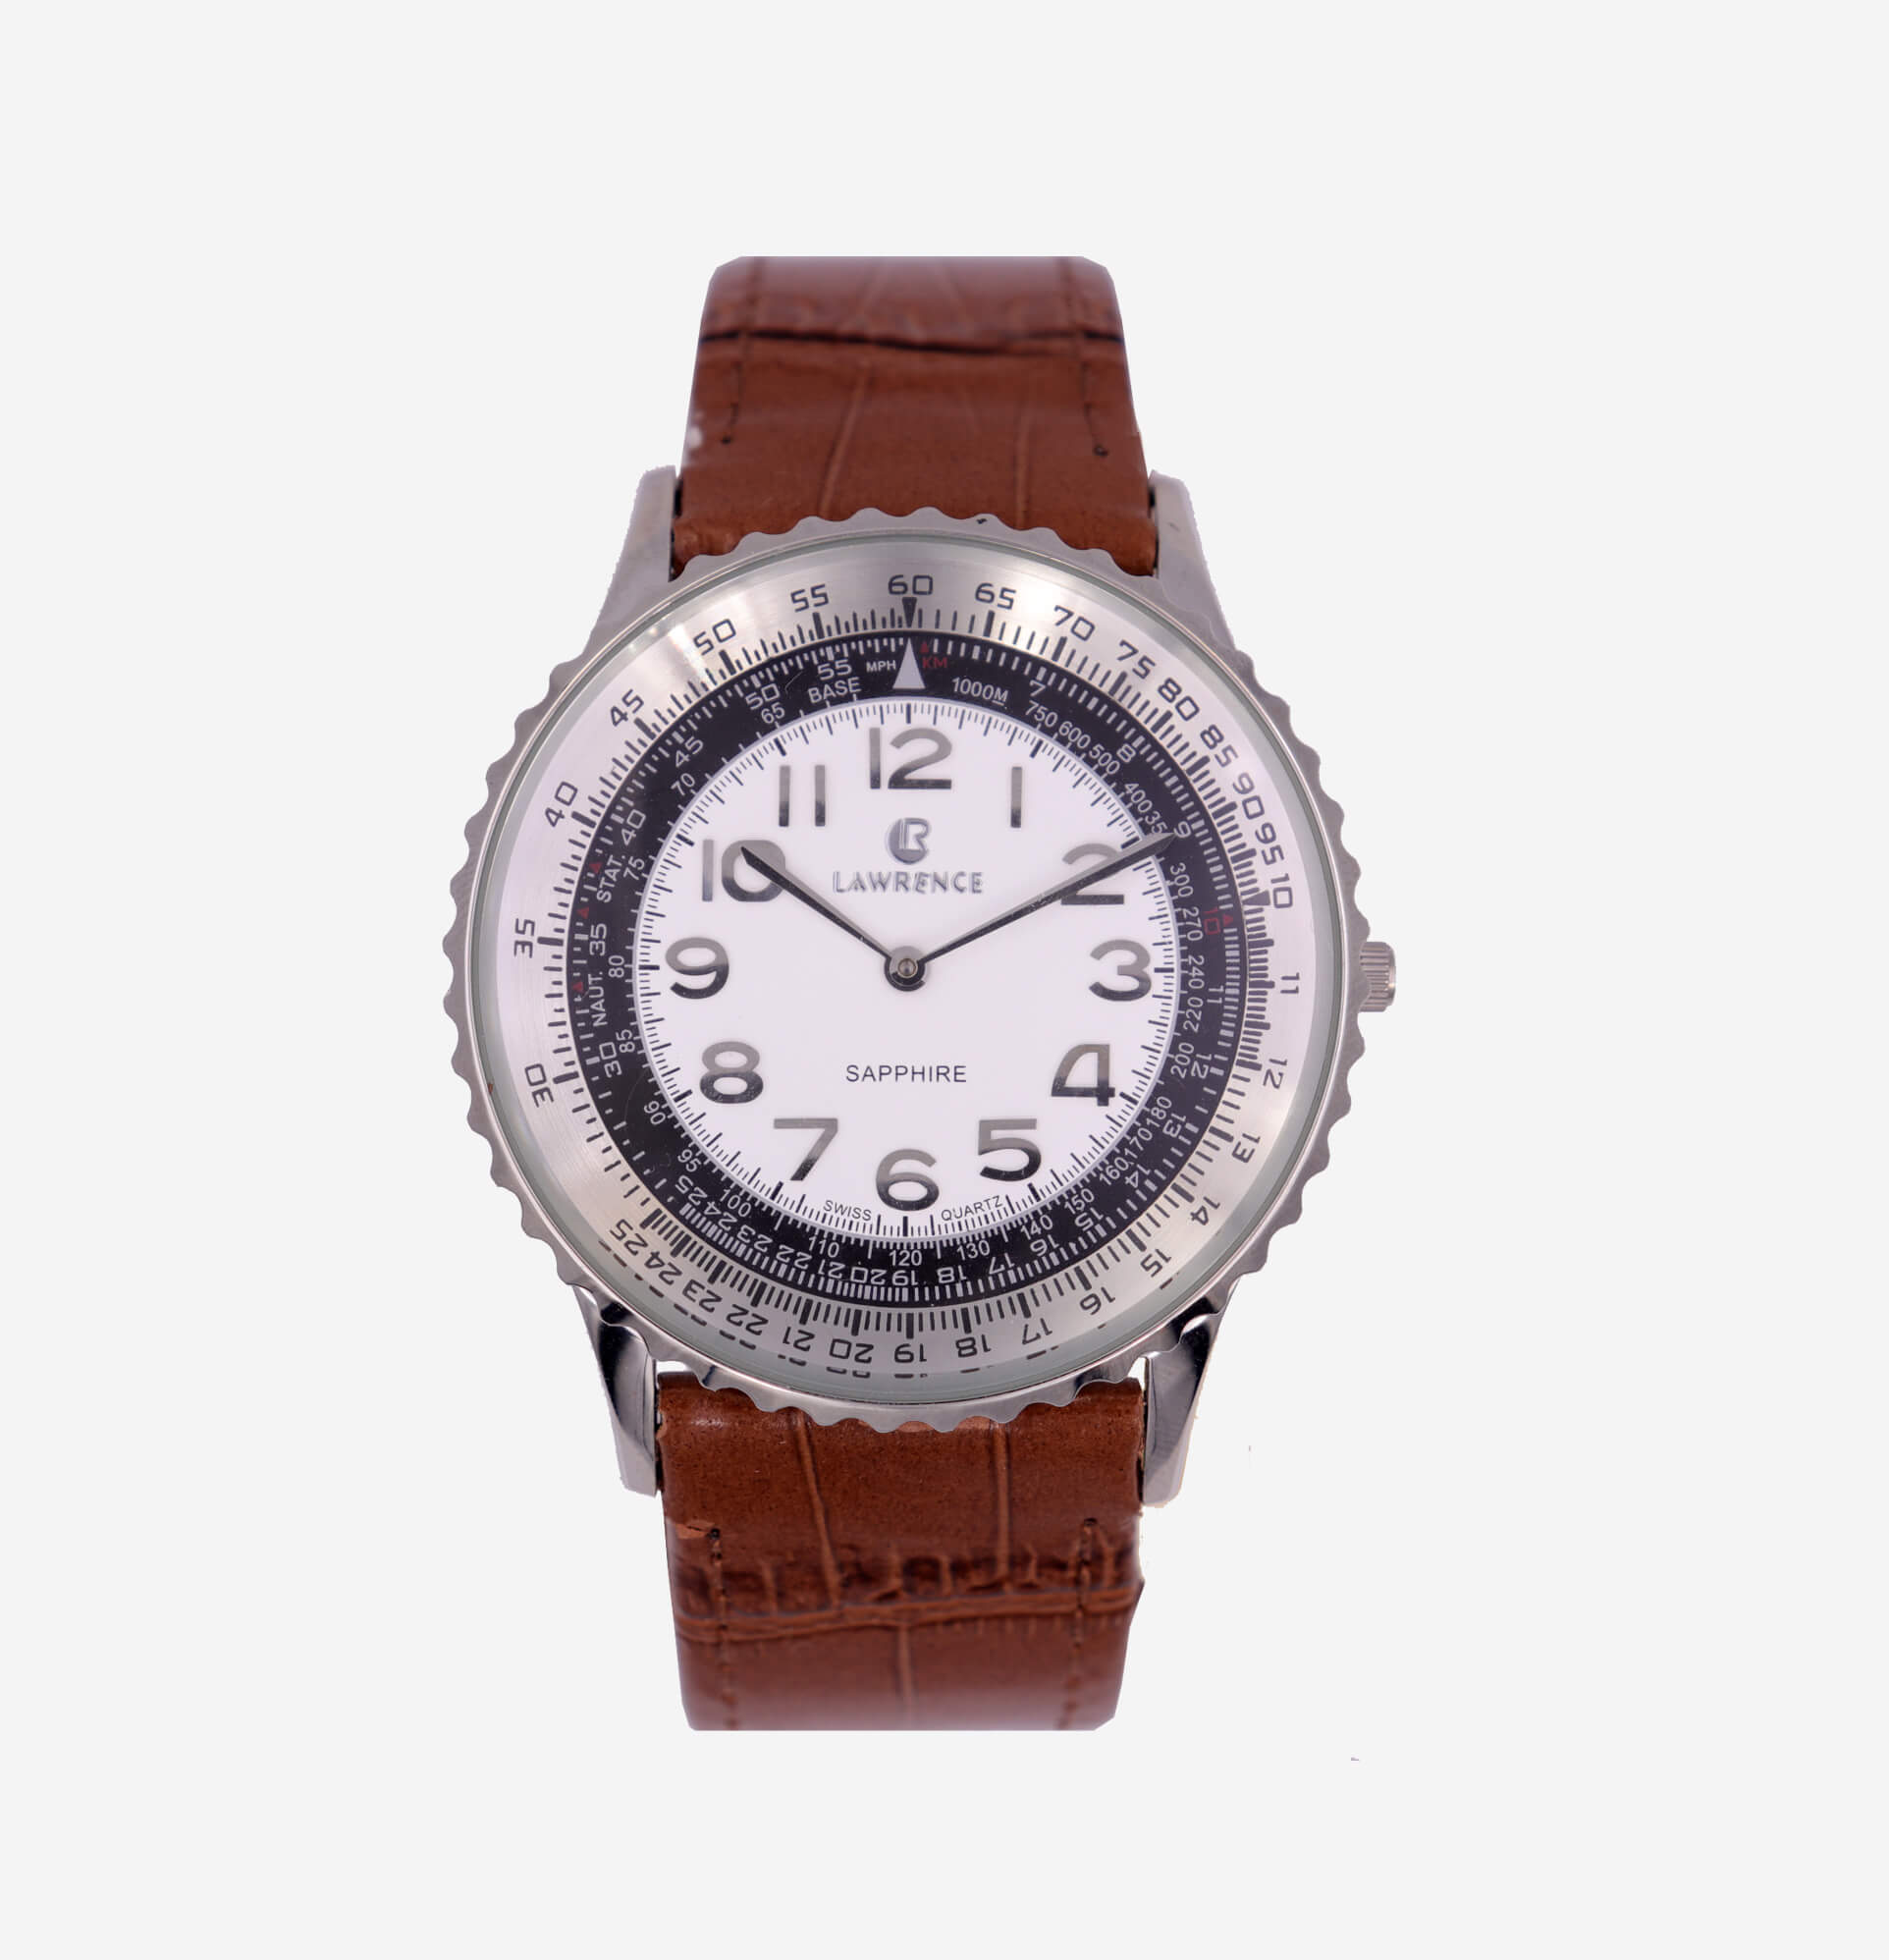 Analog Leather Watch LR-97 (Silver Tone)